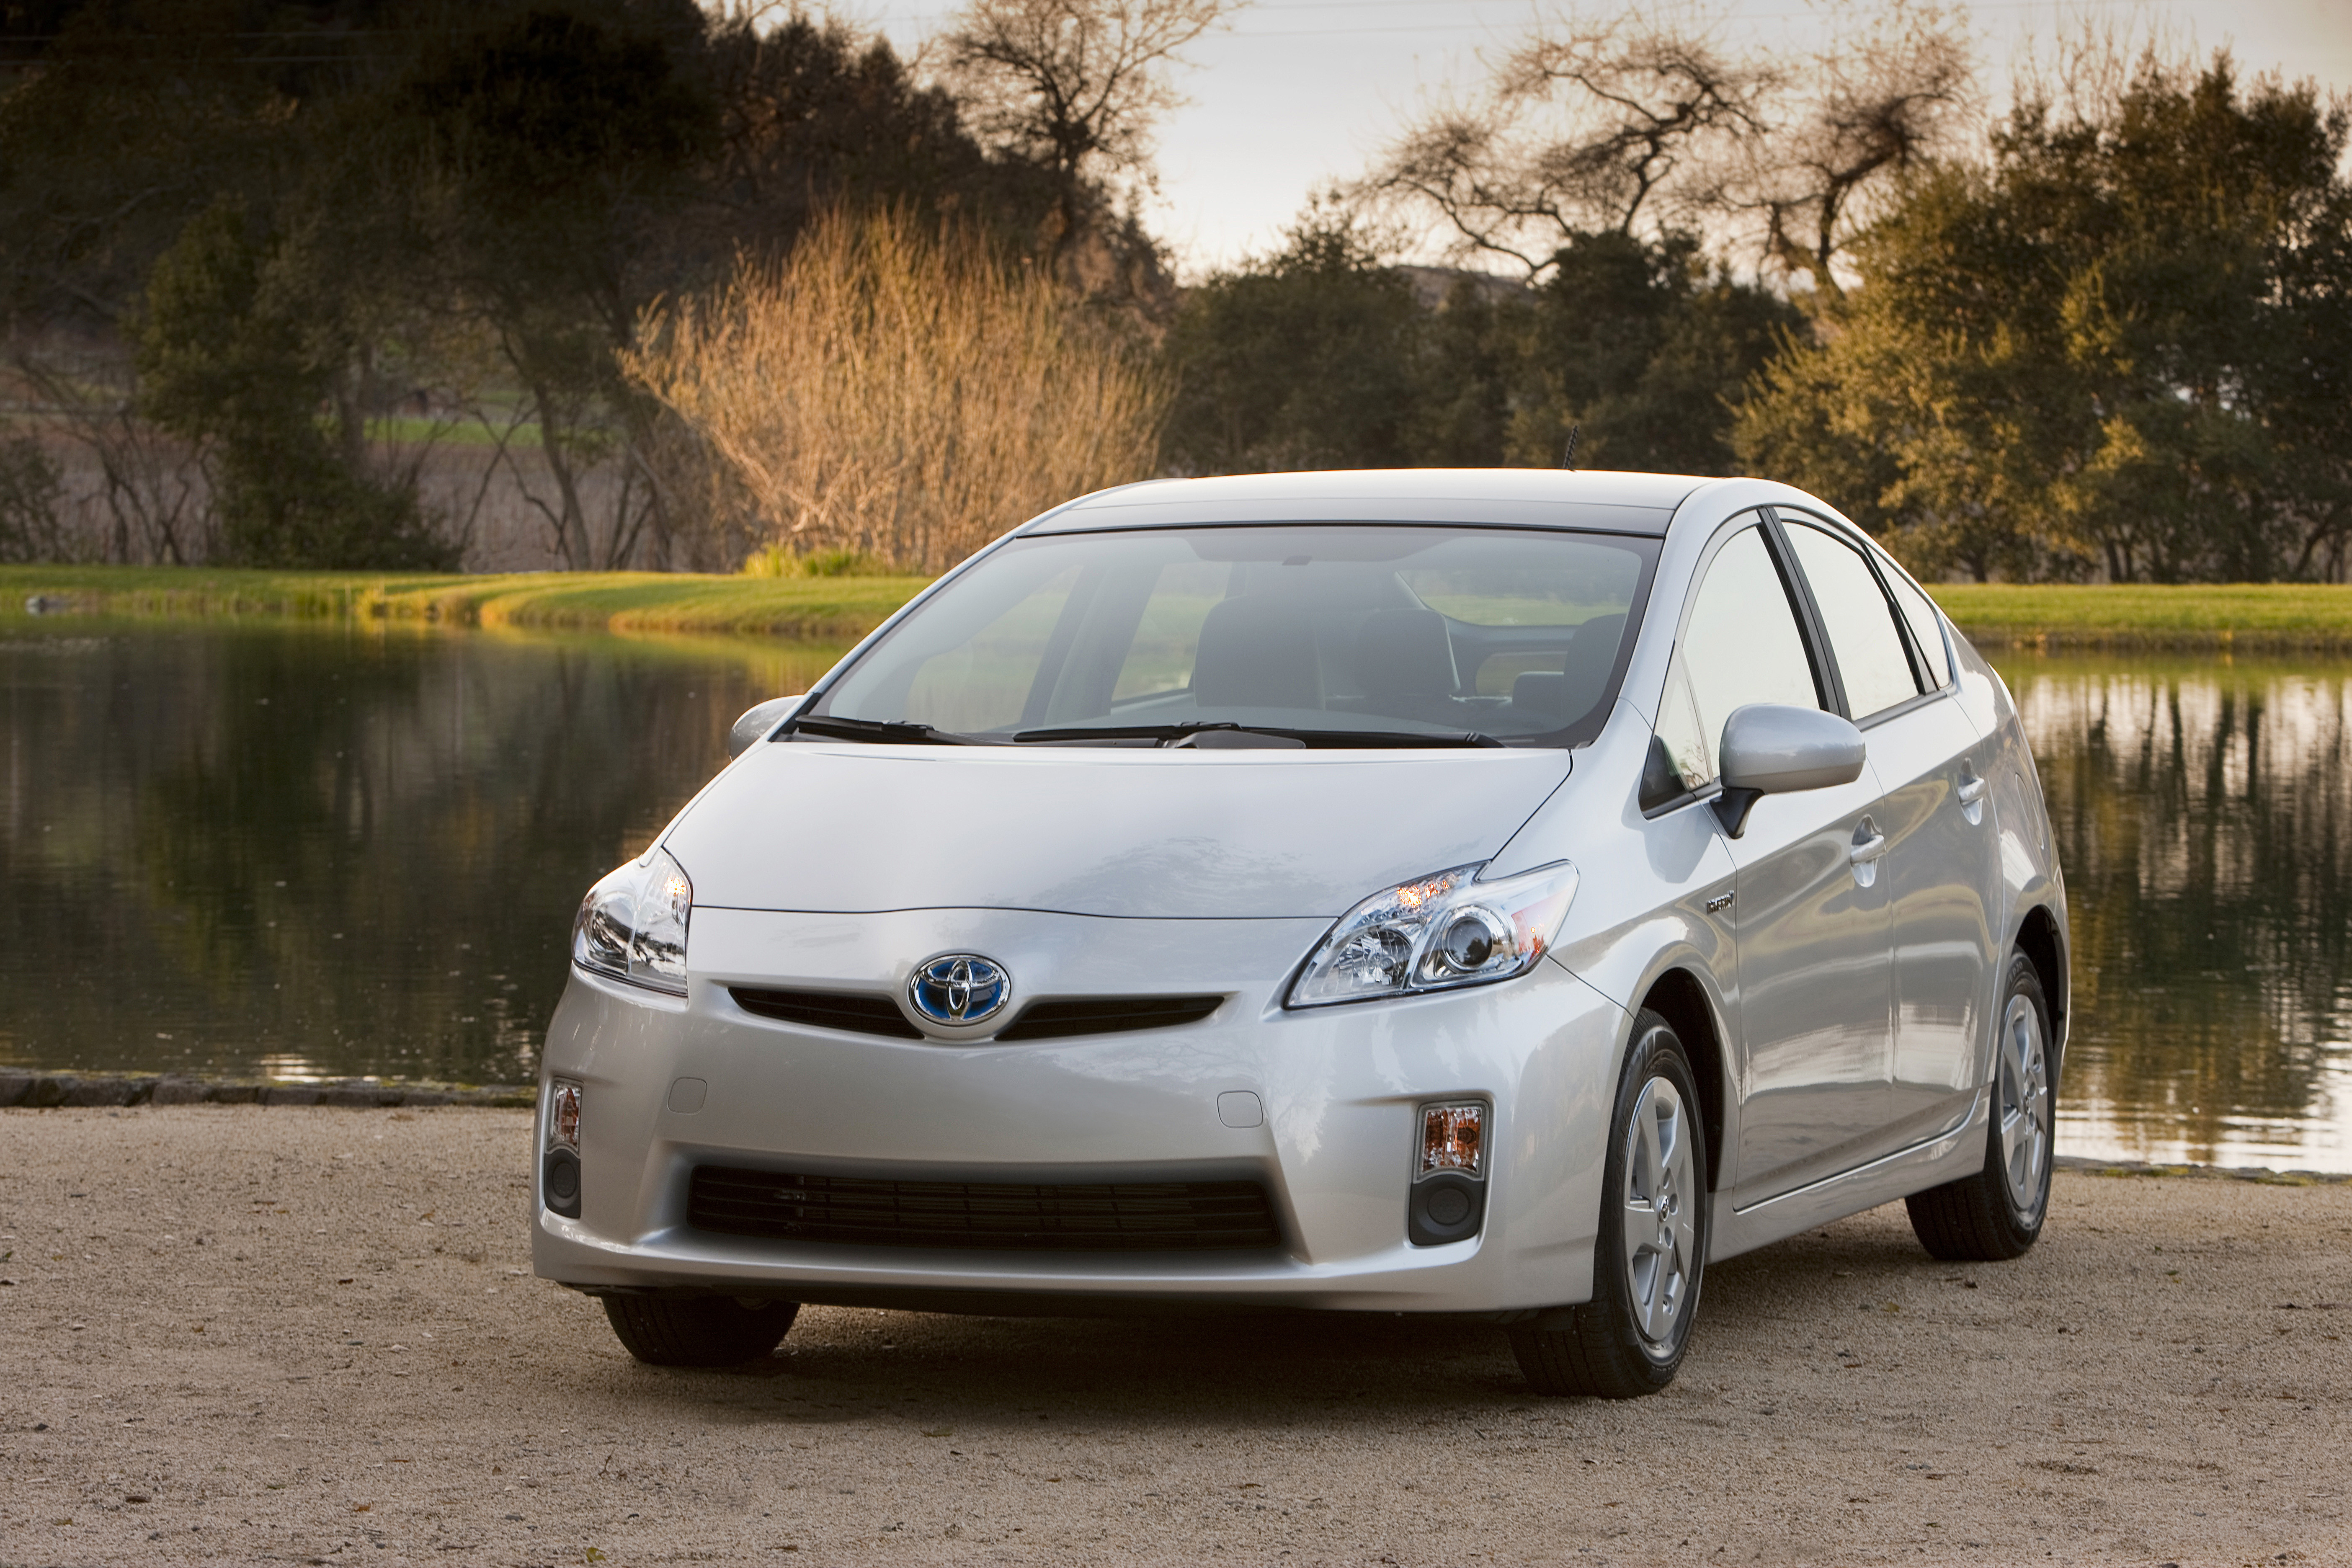 Toyota Prius 2011 года выпуска. Фото: &copy; Toyota